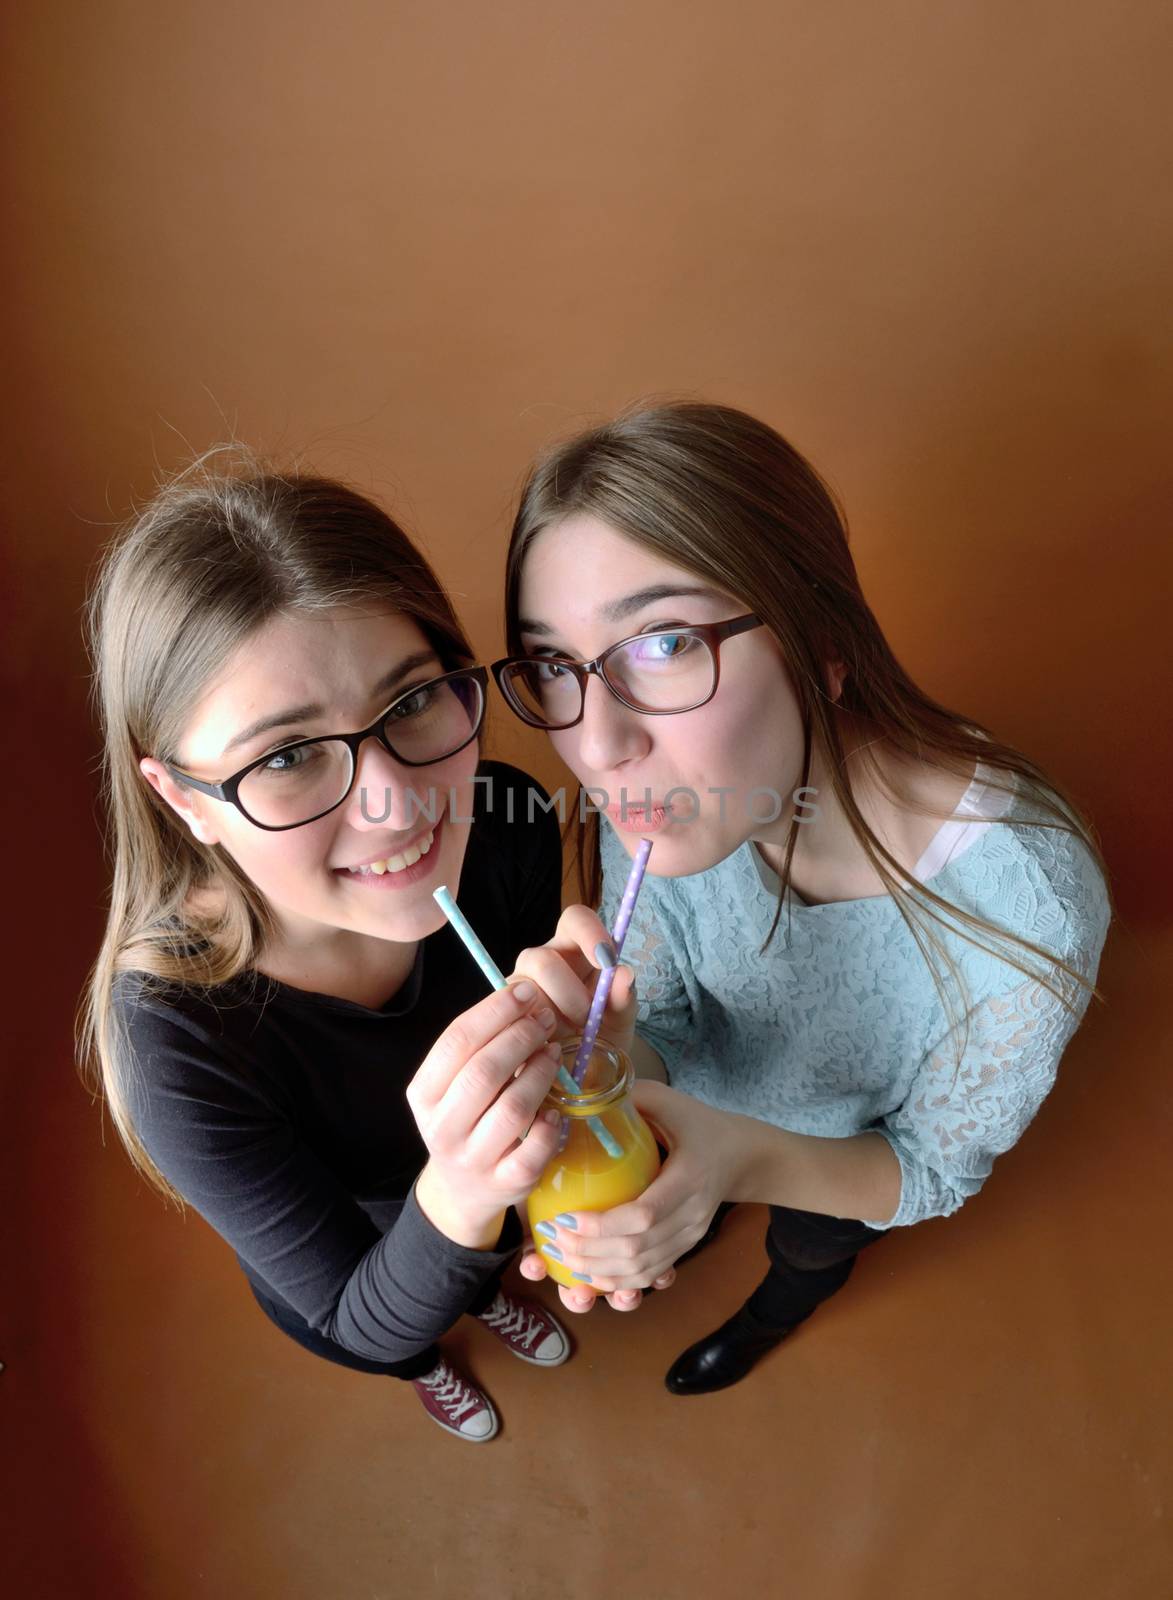 Teen girls drinking together orange juice